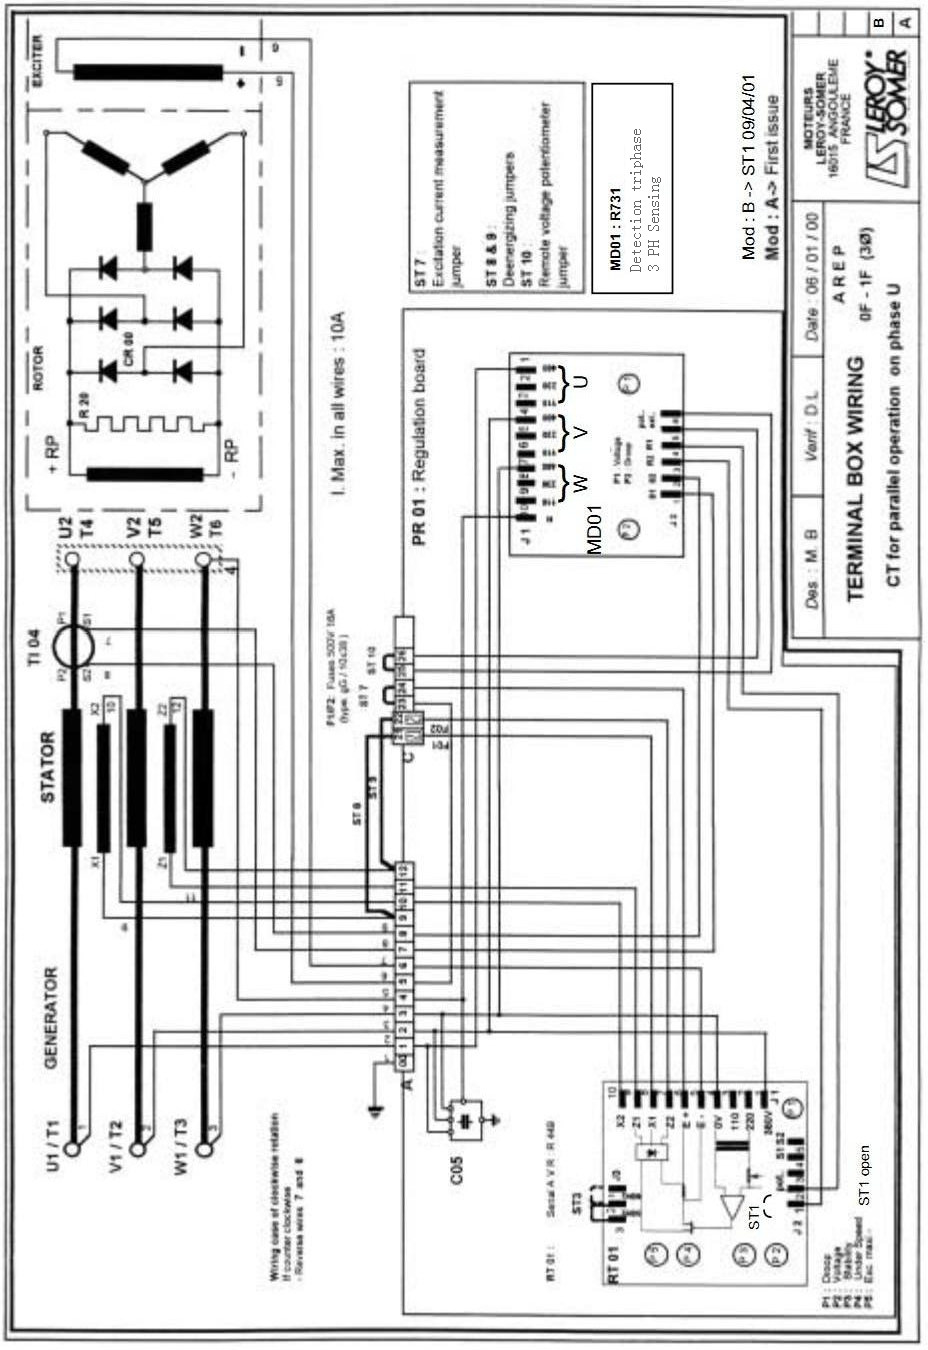 Sx460 Avr Wiring Diagram - Wiring Diagram and Schematic